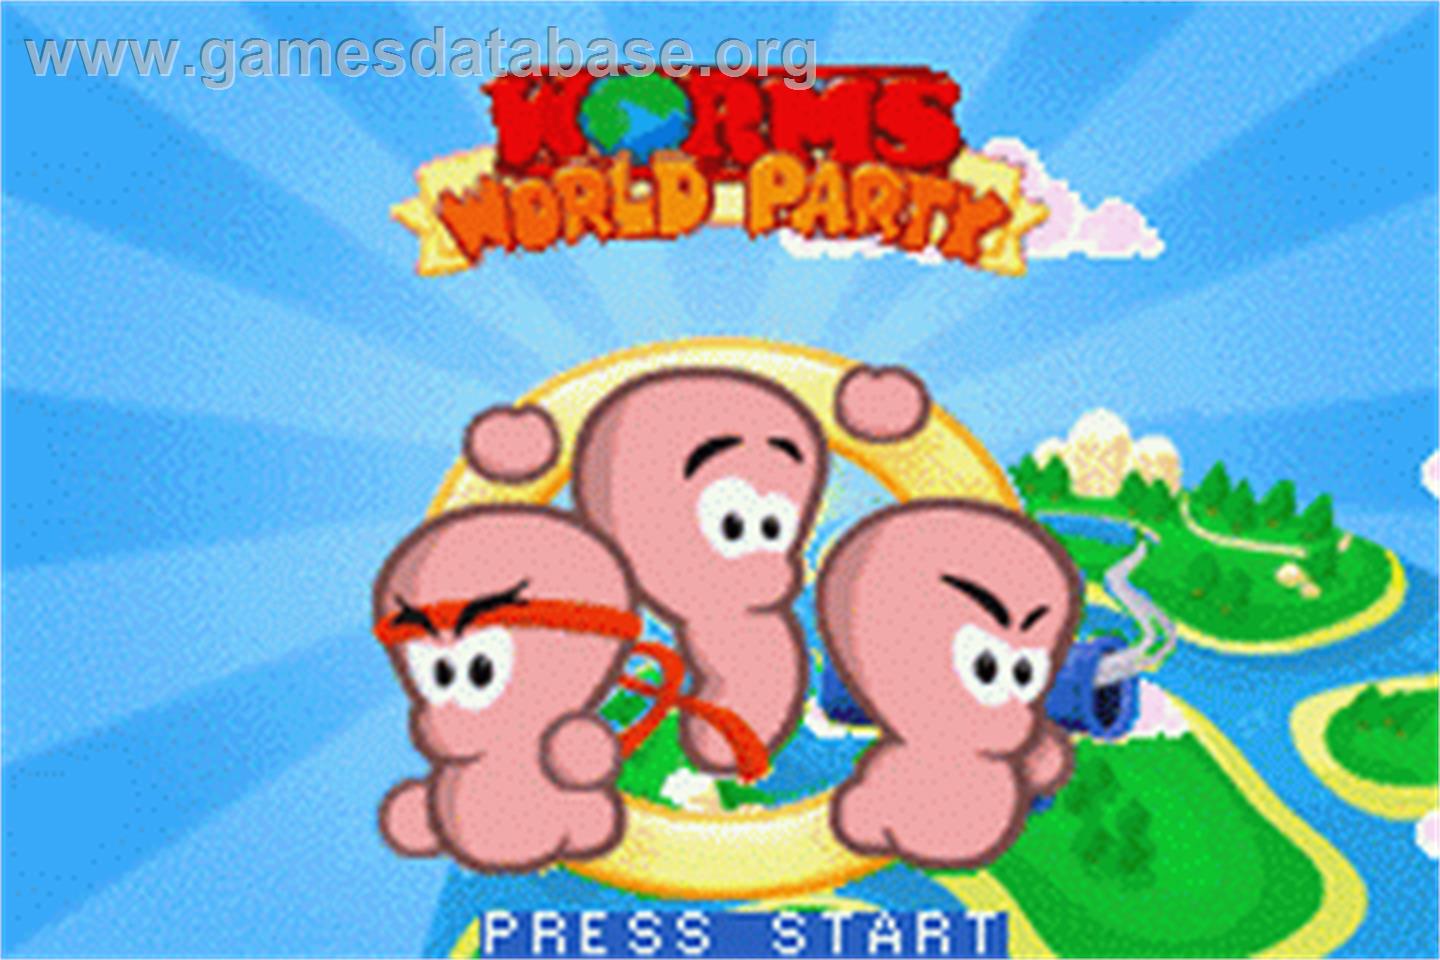 Worms World Party - Nintendo Game Boy Advance - Artwork - Title Screen